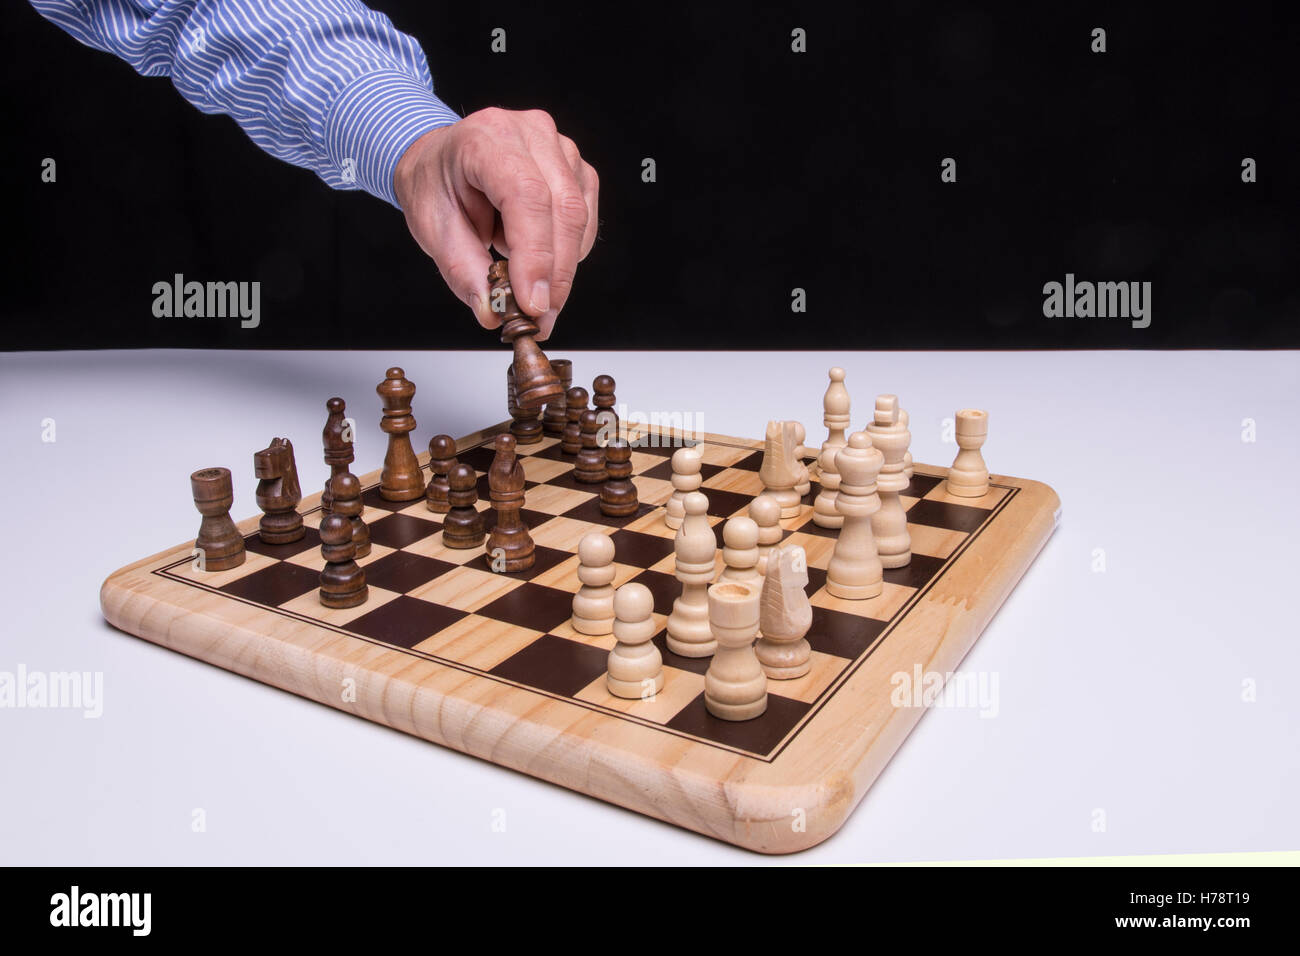 jeu d’échecs Banque D'Images